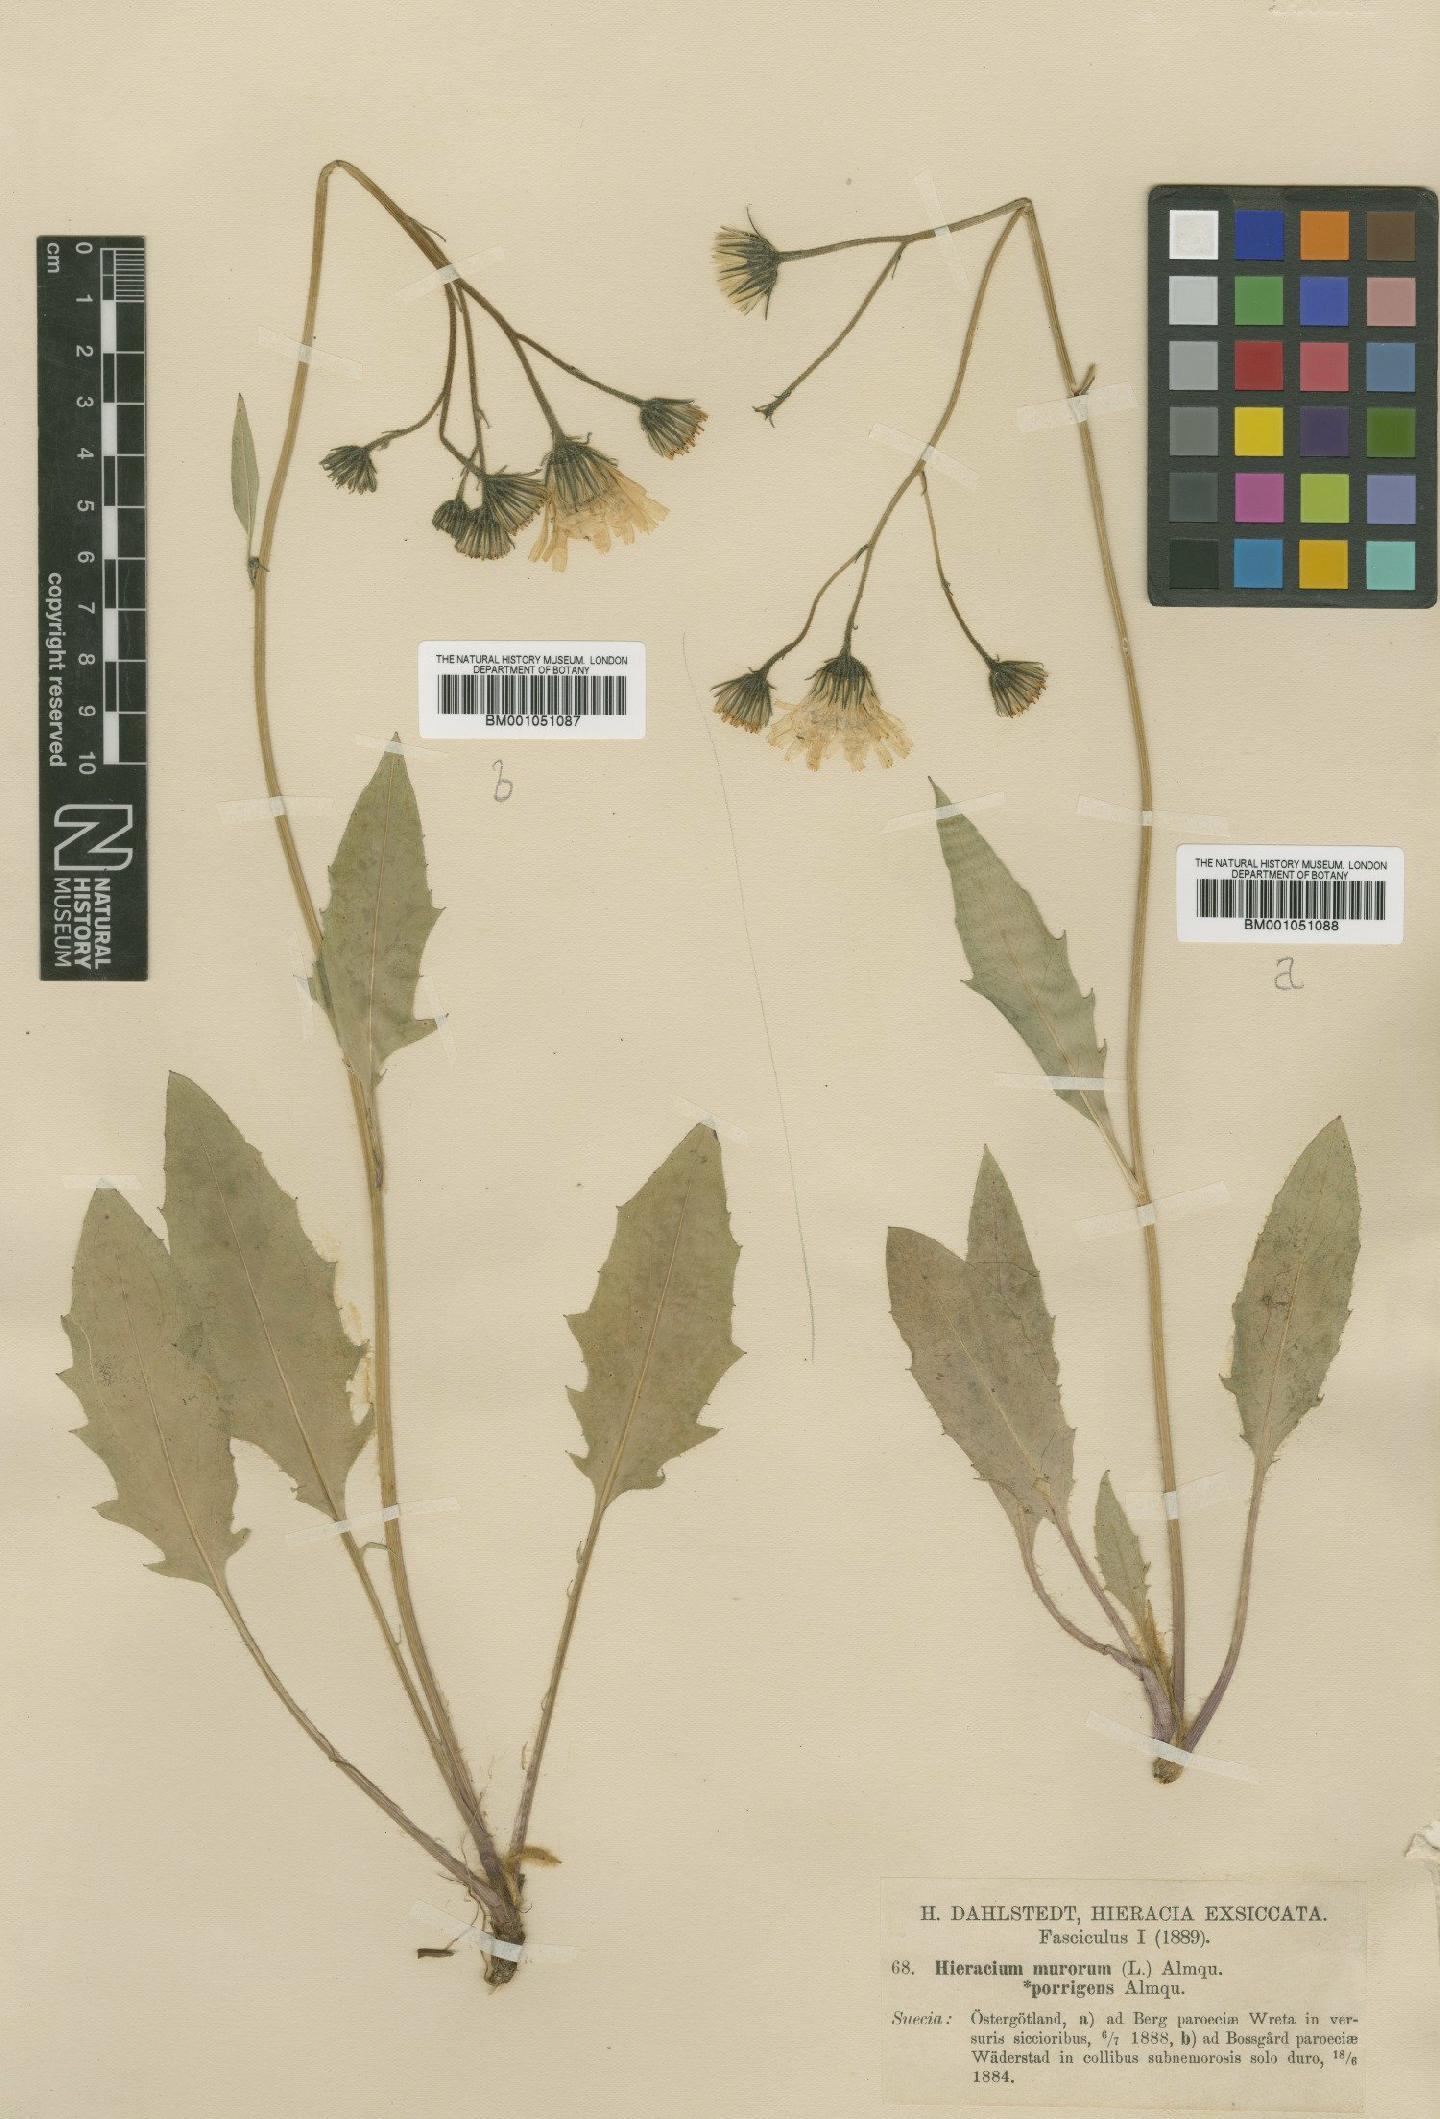 To NHMUK collection (Hieracium caesium subsp. porrigens (Almq.) Zahn; TYPE; NHMUK:ecatalogue:2421276)